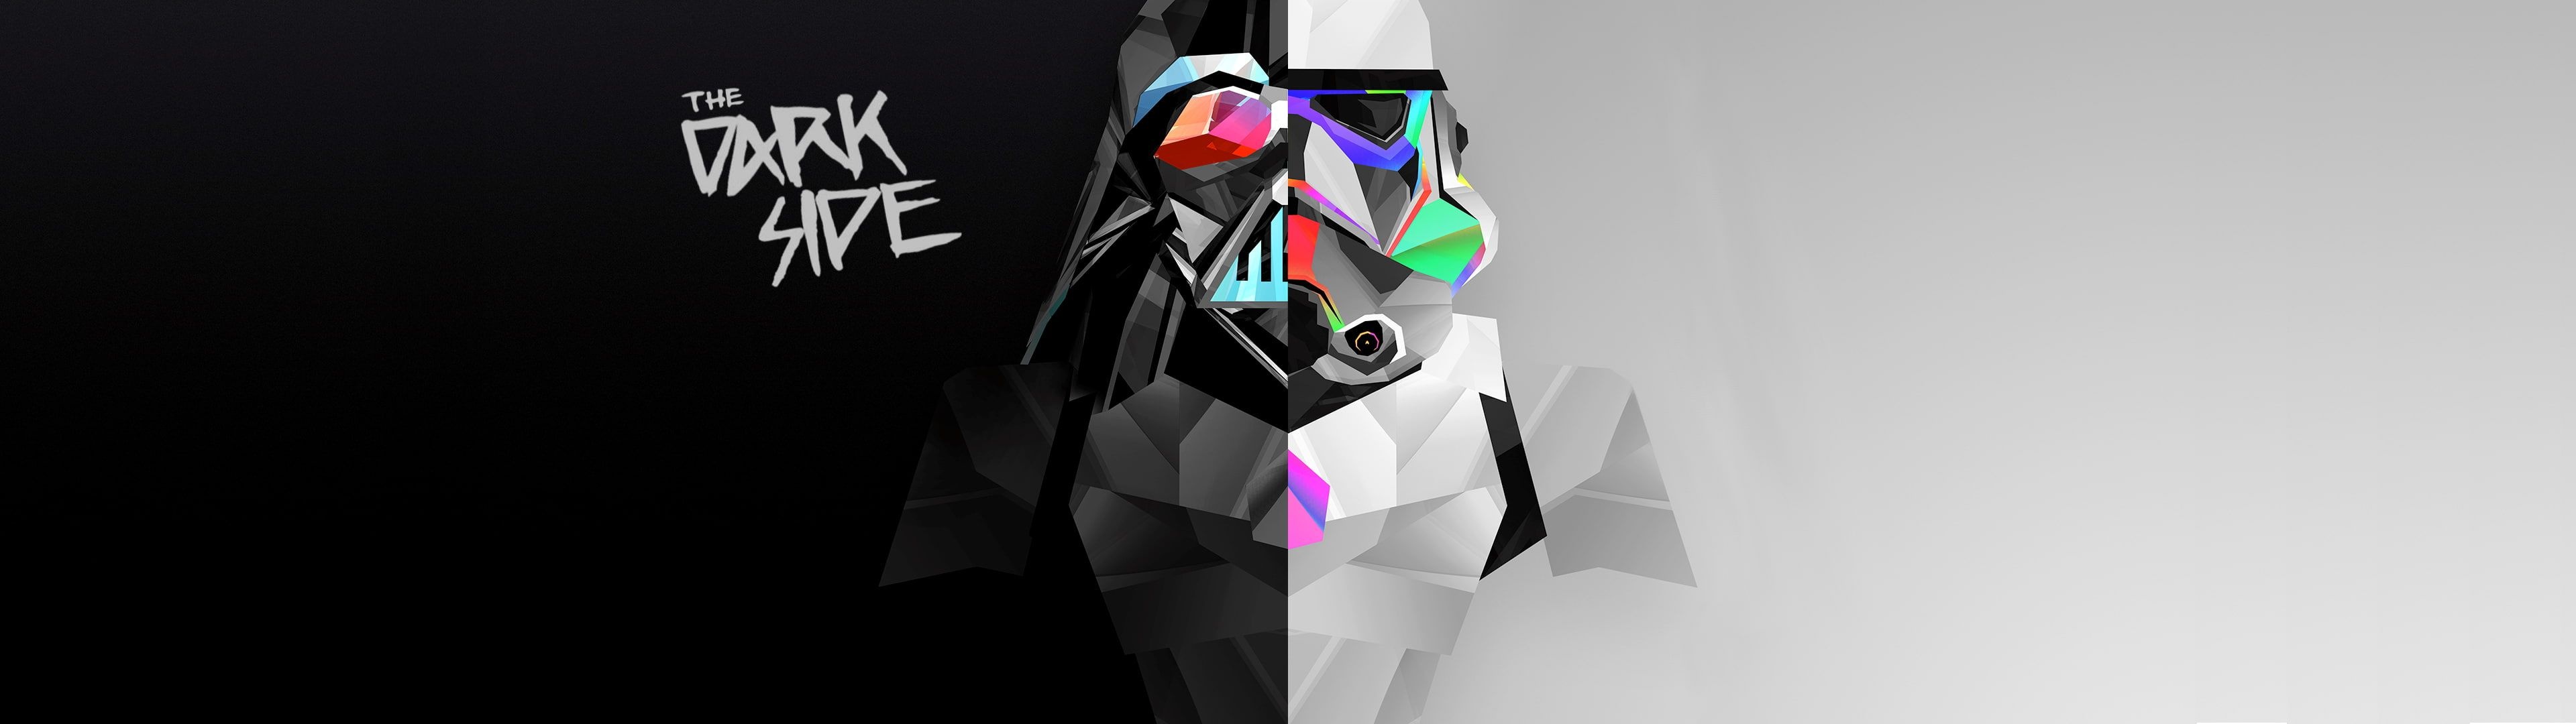 Graphic: Abstract Digital Art, Stormtrooper, Darth Vader, The Dark Side, Star Wars. 3840x1080 Dual Screen Background.